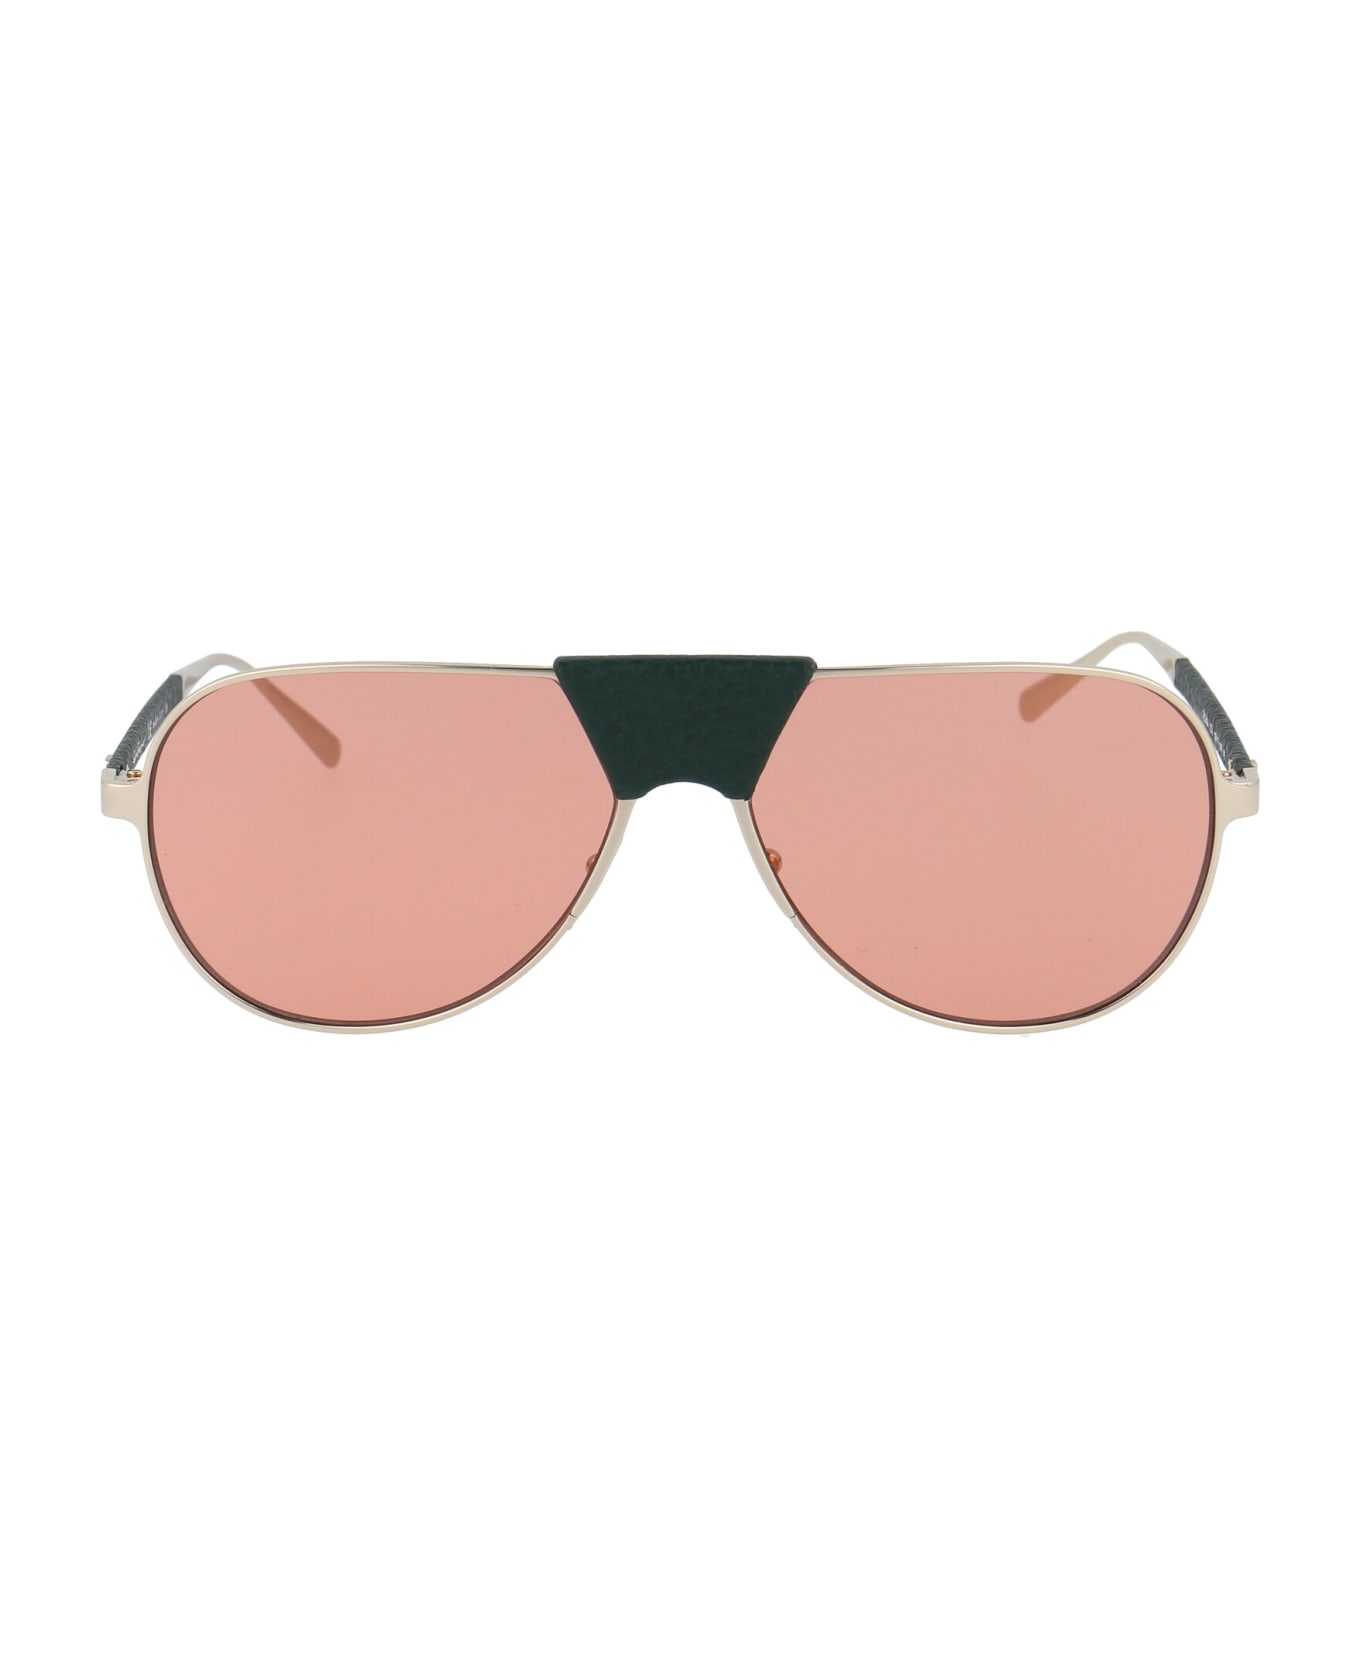 Salvatore Ferragamo Eyewear Sf220sl with Sunglasses - 754 LIGHT GOLD/FOREST